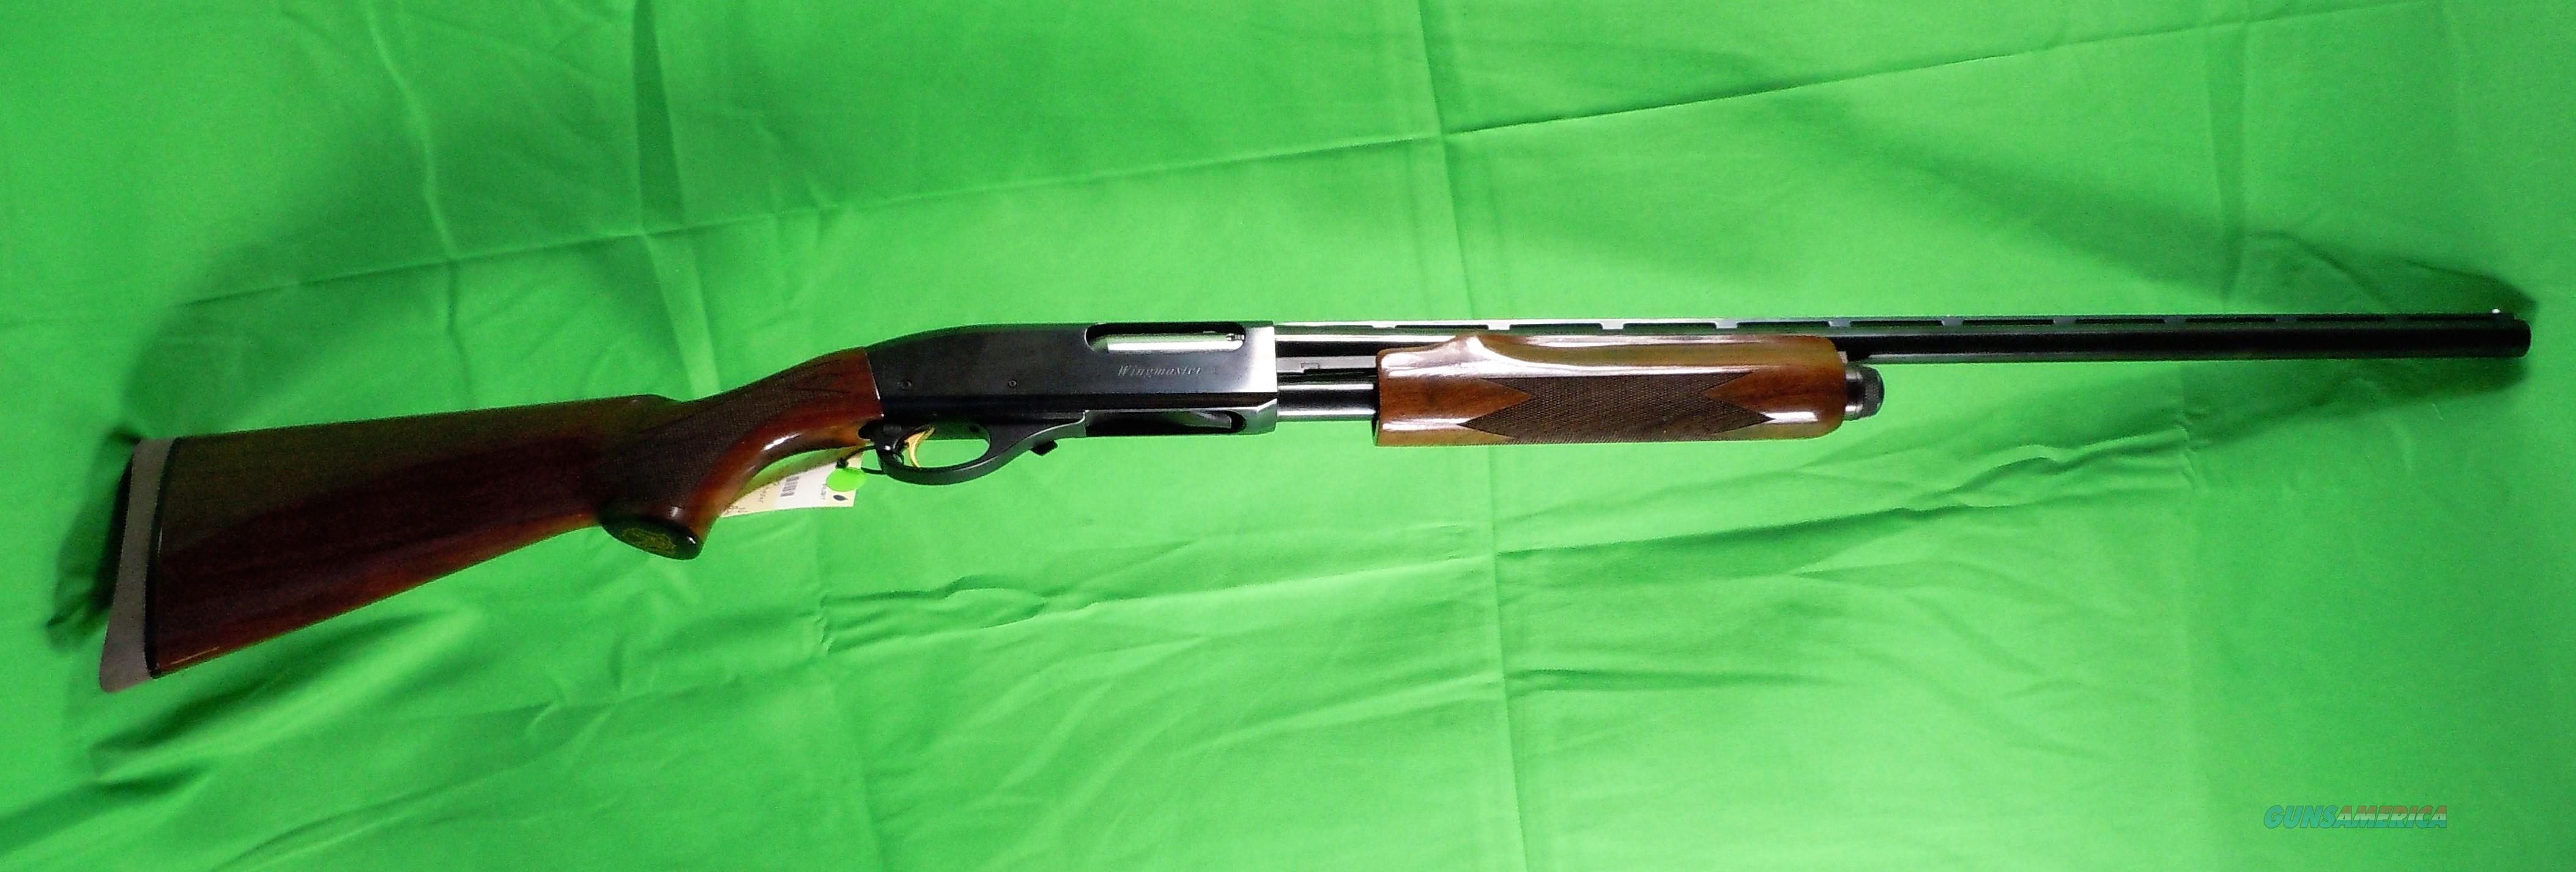 remington 870 wingmaster serial number t173886v